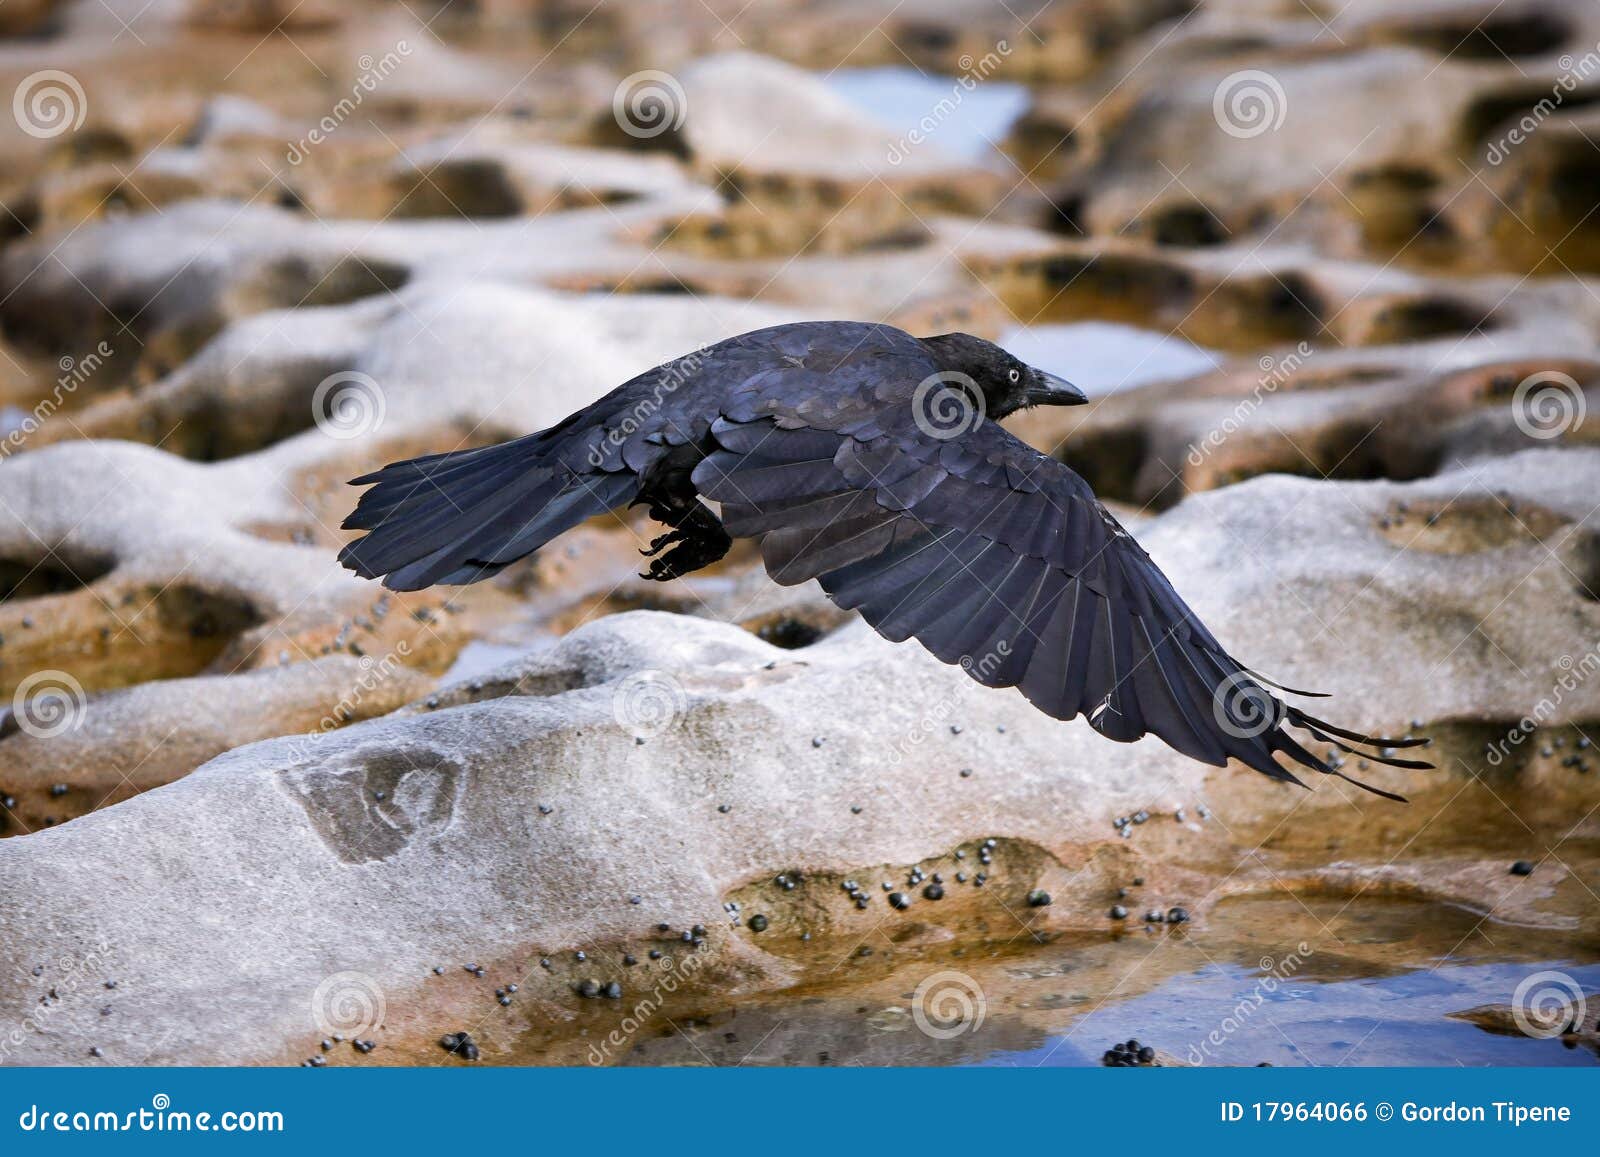 black crow in flight over rocky terrain